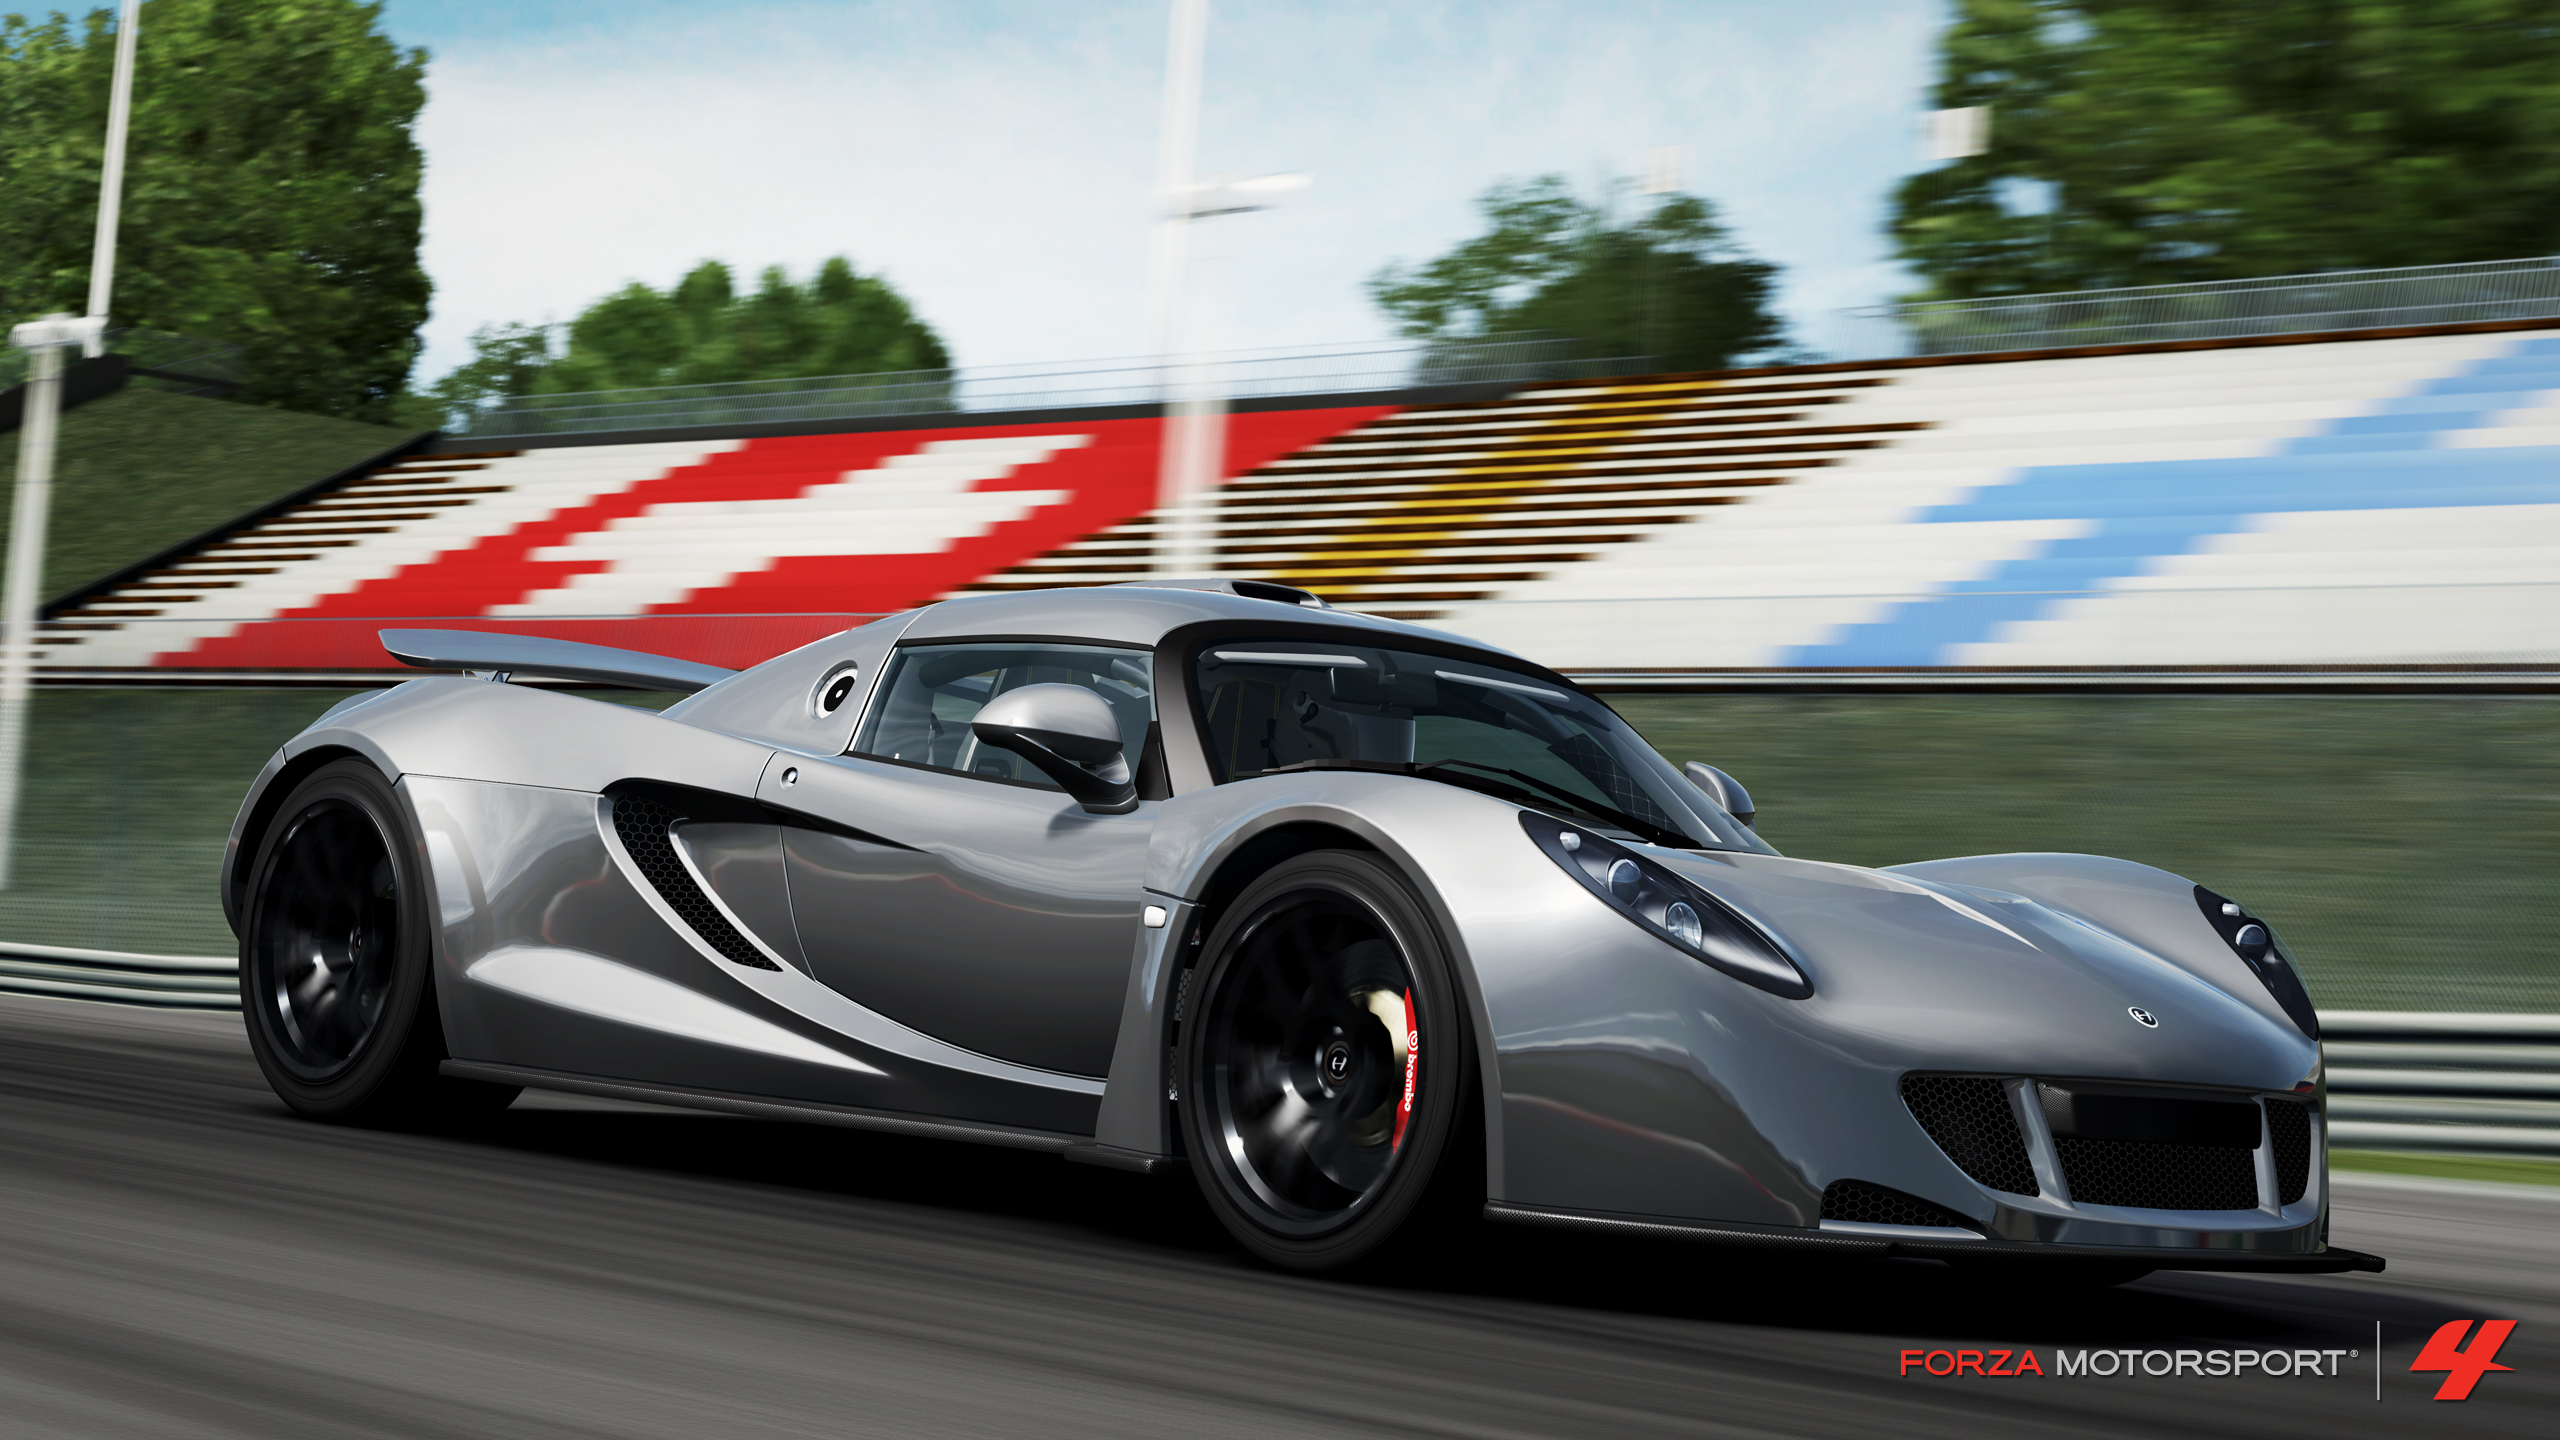 High Resolution Wallpaper | Forza Motorsport 4 2560x1440 px